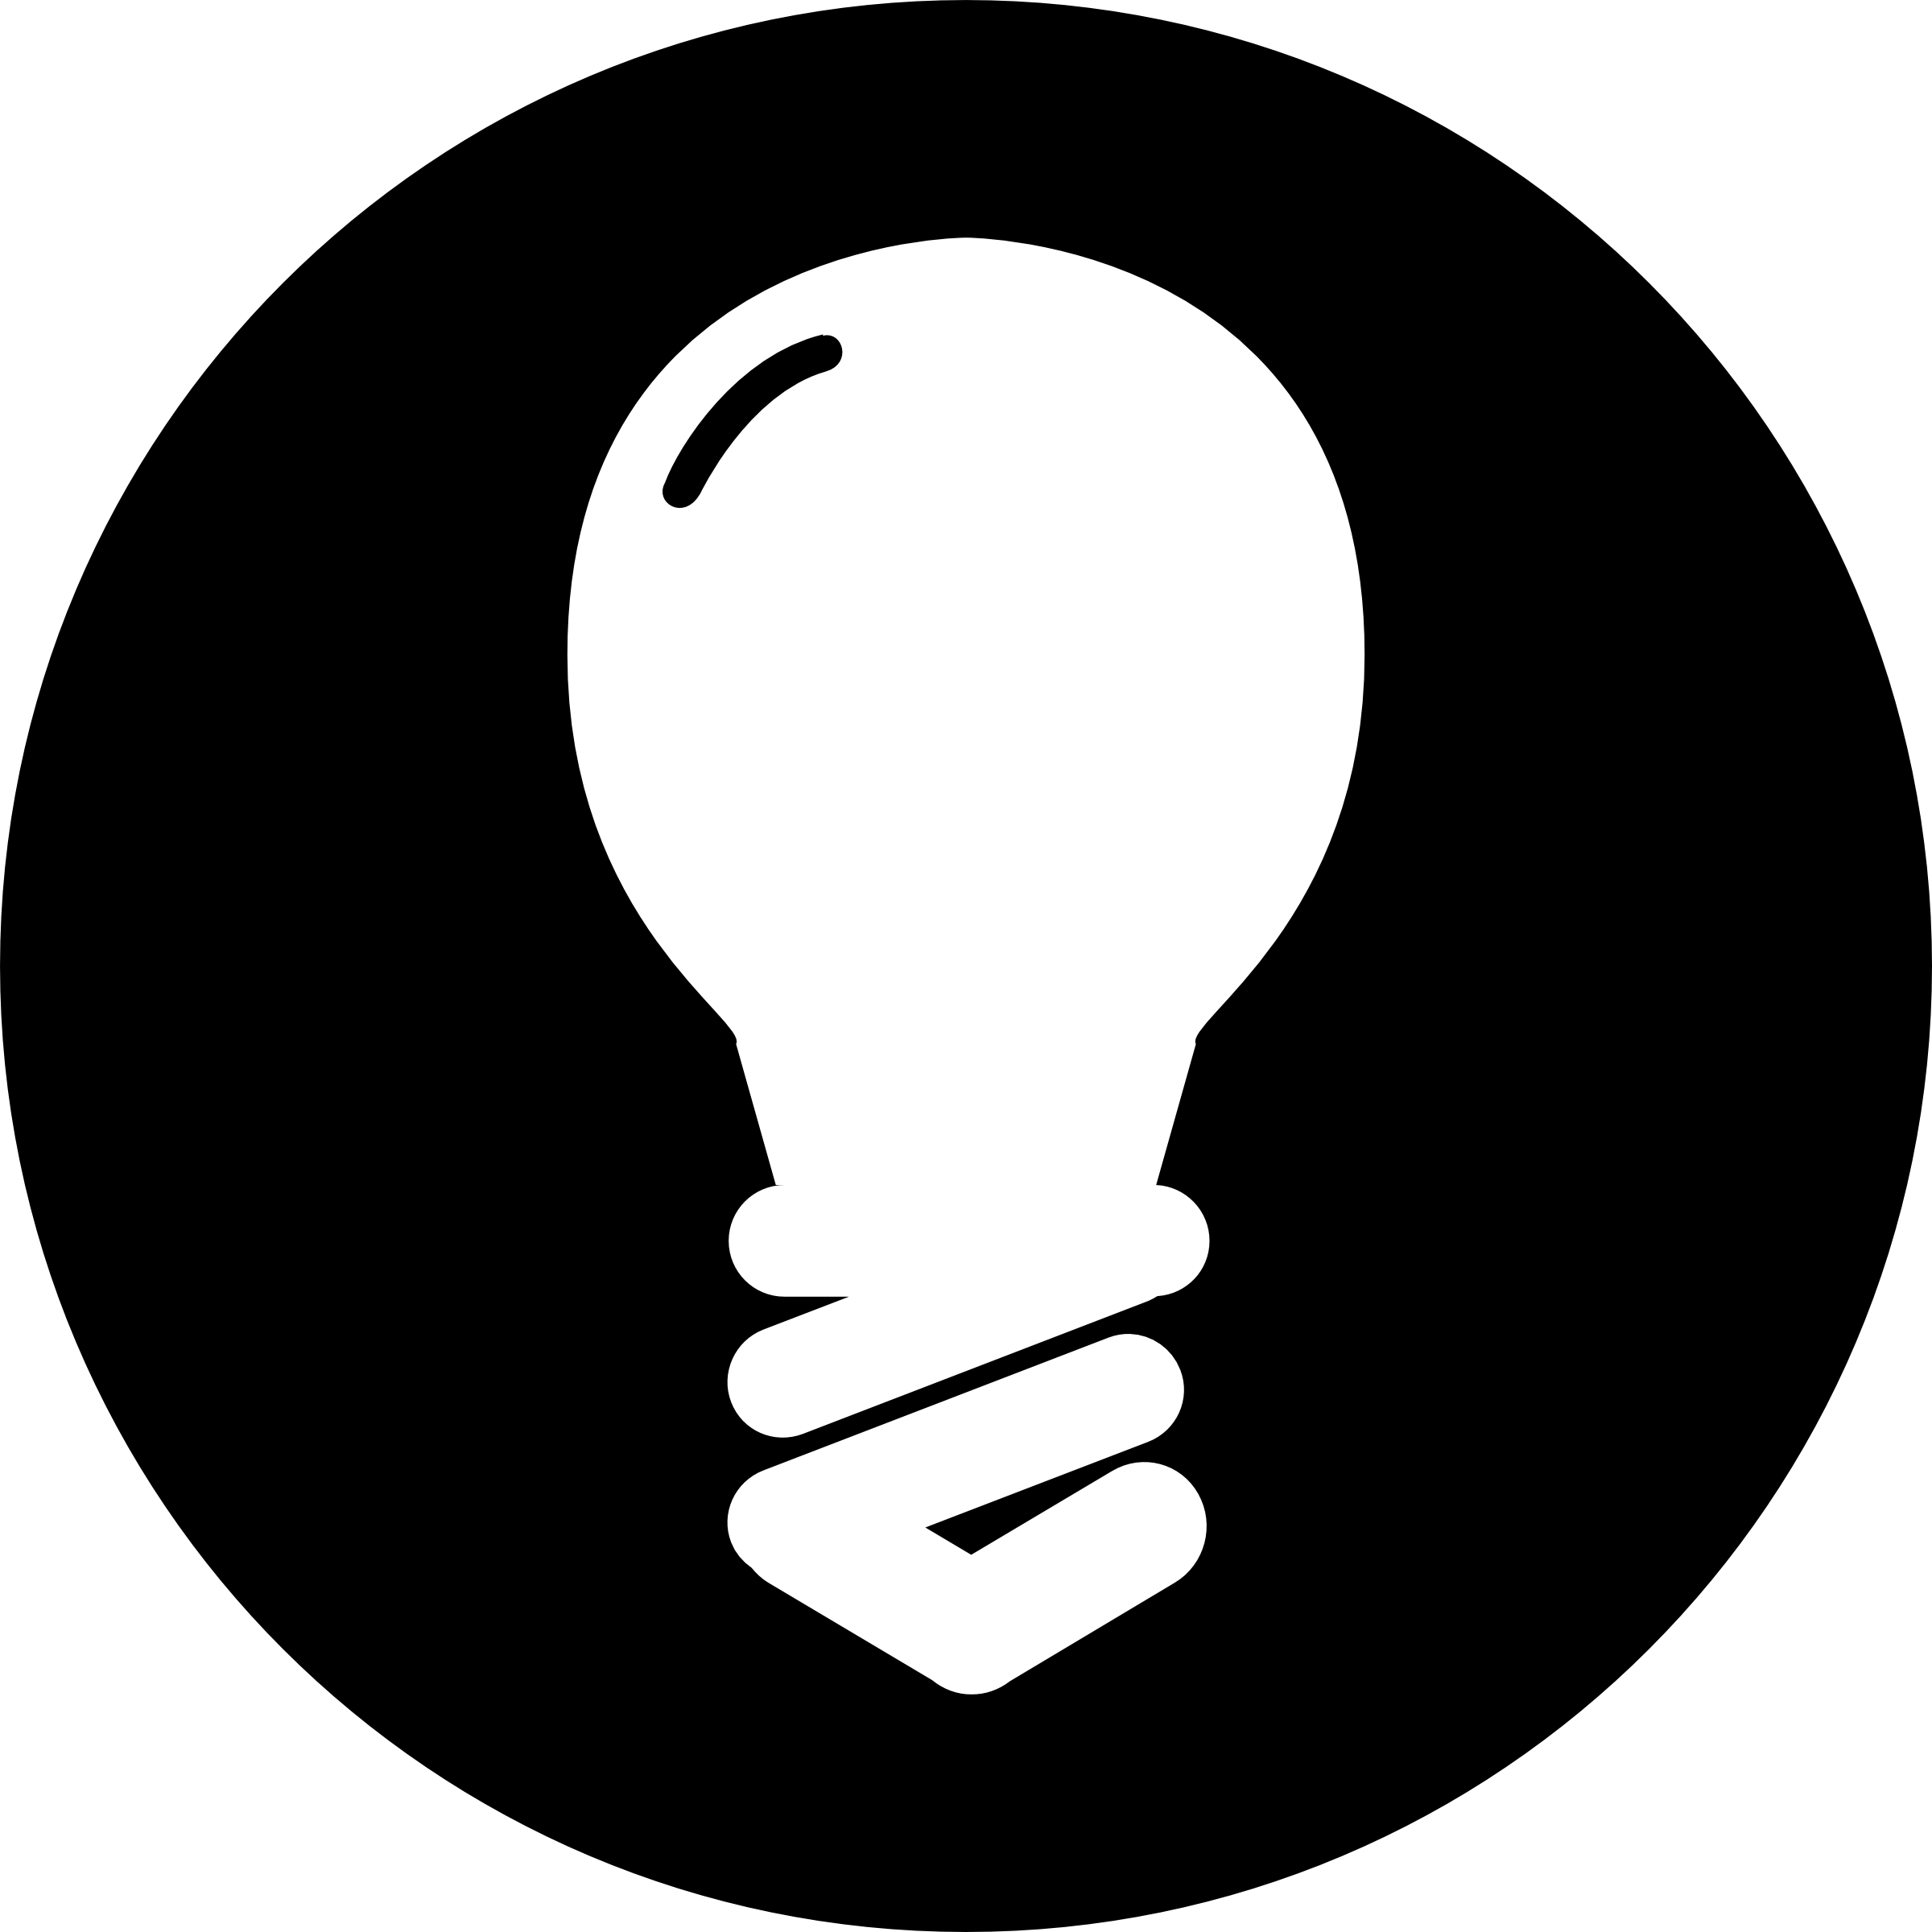 Light Bulb Clip Art Png   Clipart Panda   Free Clipart Images